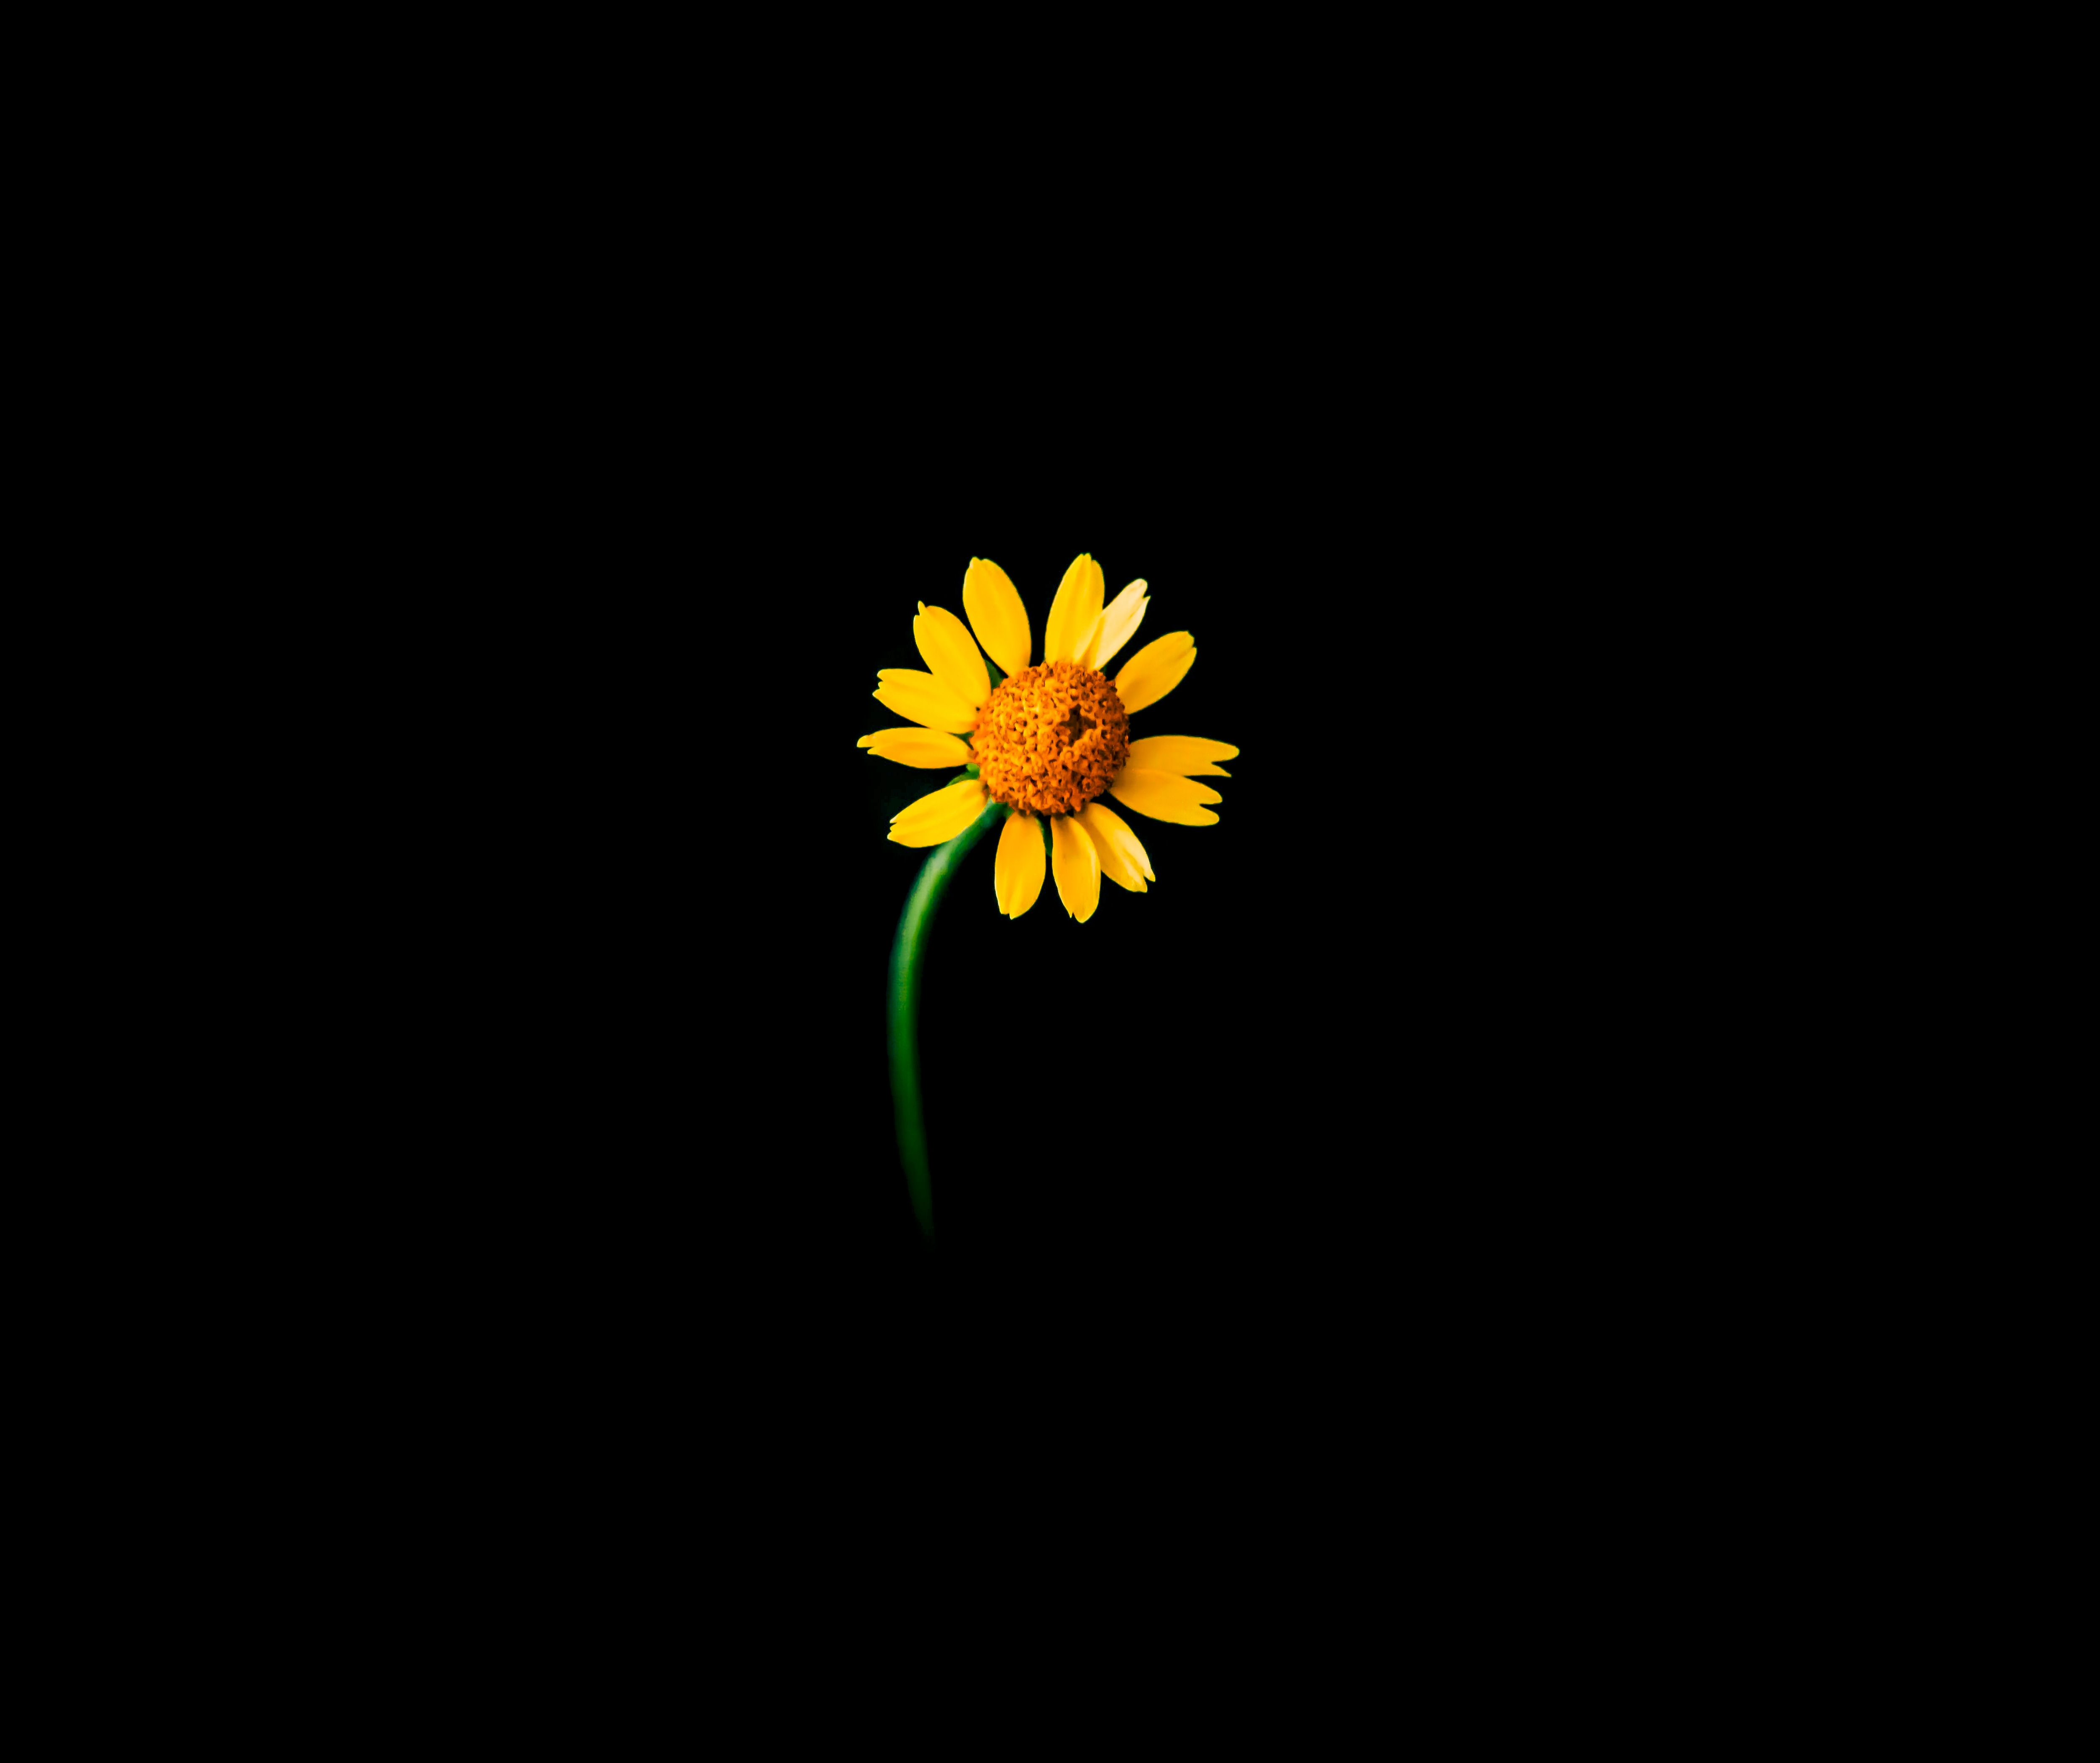 HD wallpaper, Black Background, 5K, Sunflower, Lonely